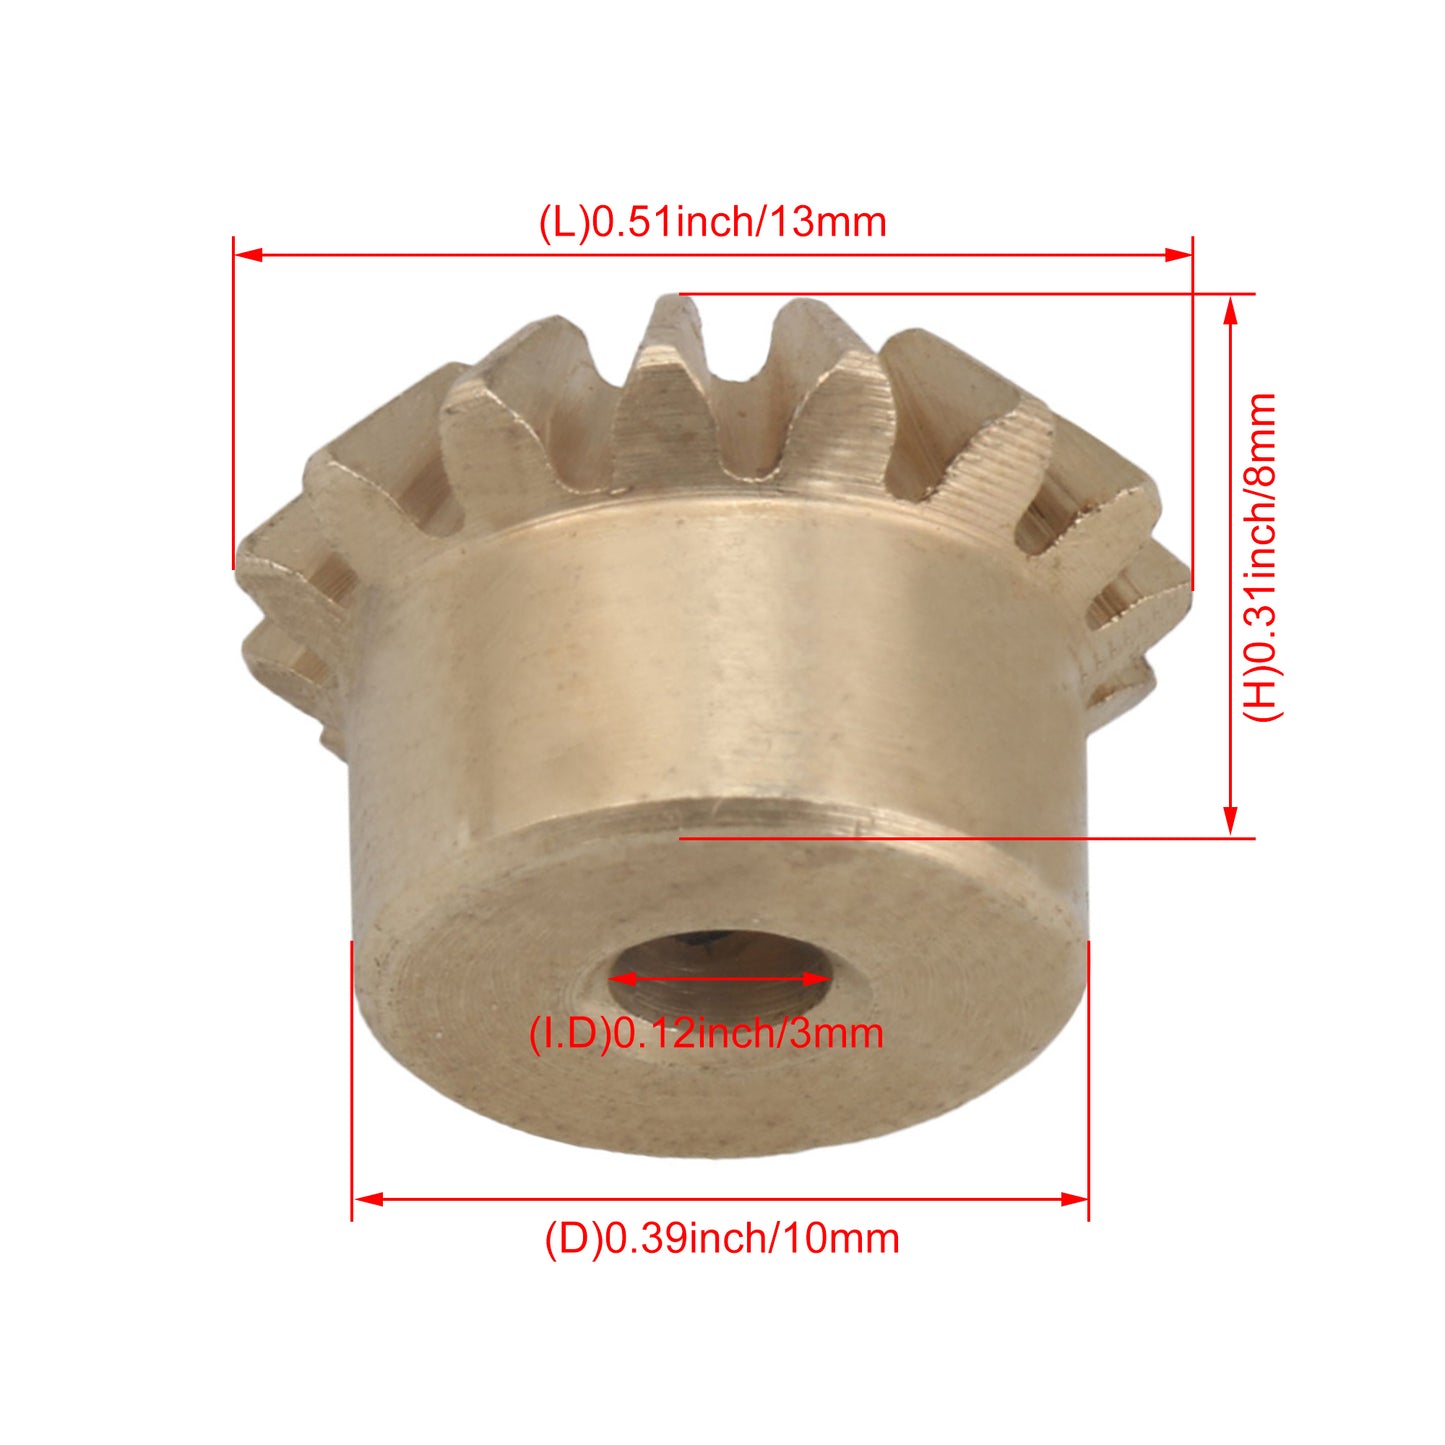 BQLZR Copper 0.8 Modulus 3mm Hole Diameter 15T Tapered Bevel Gear Wheel with Screw